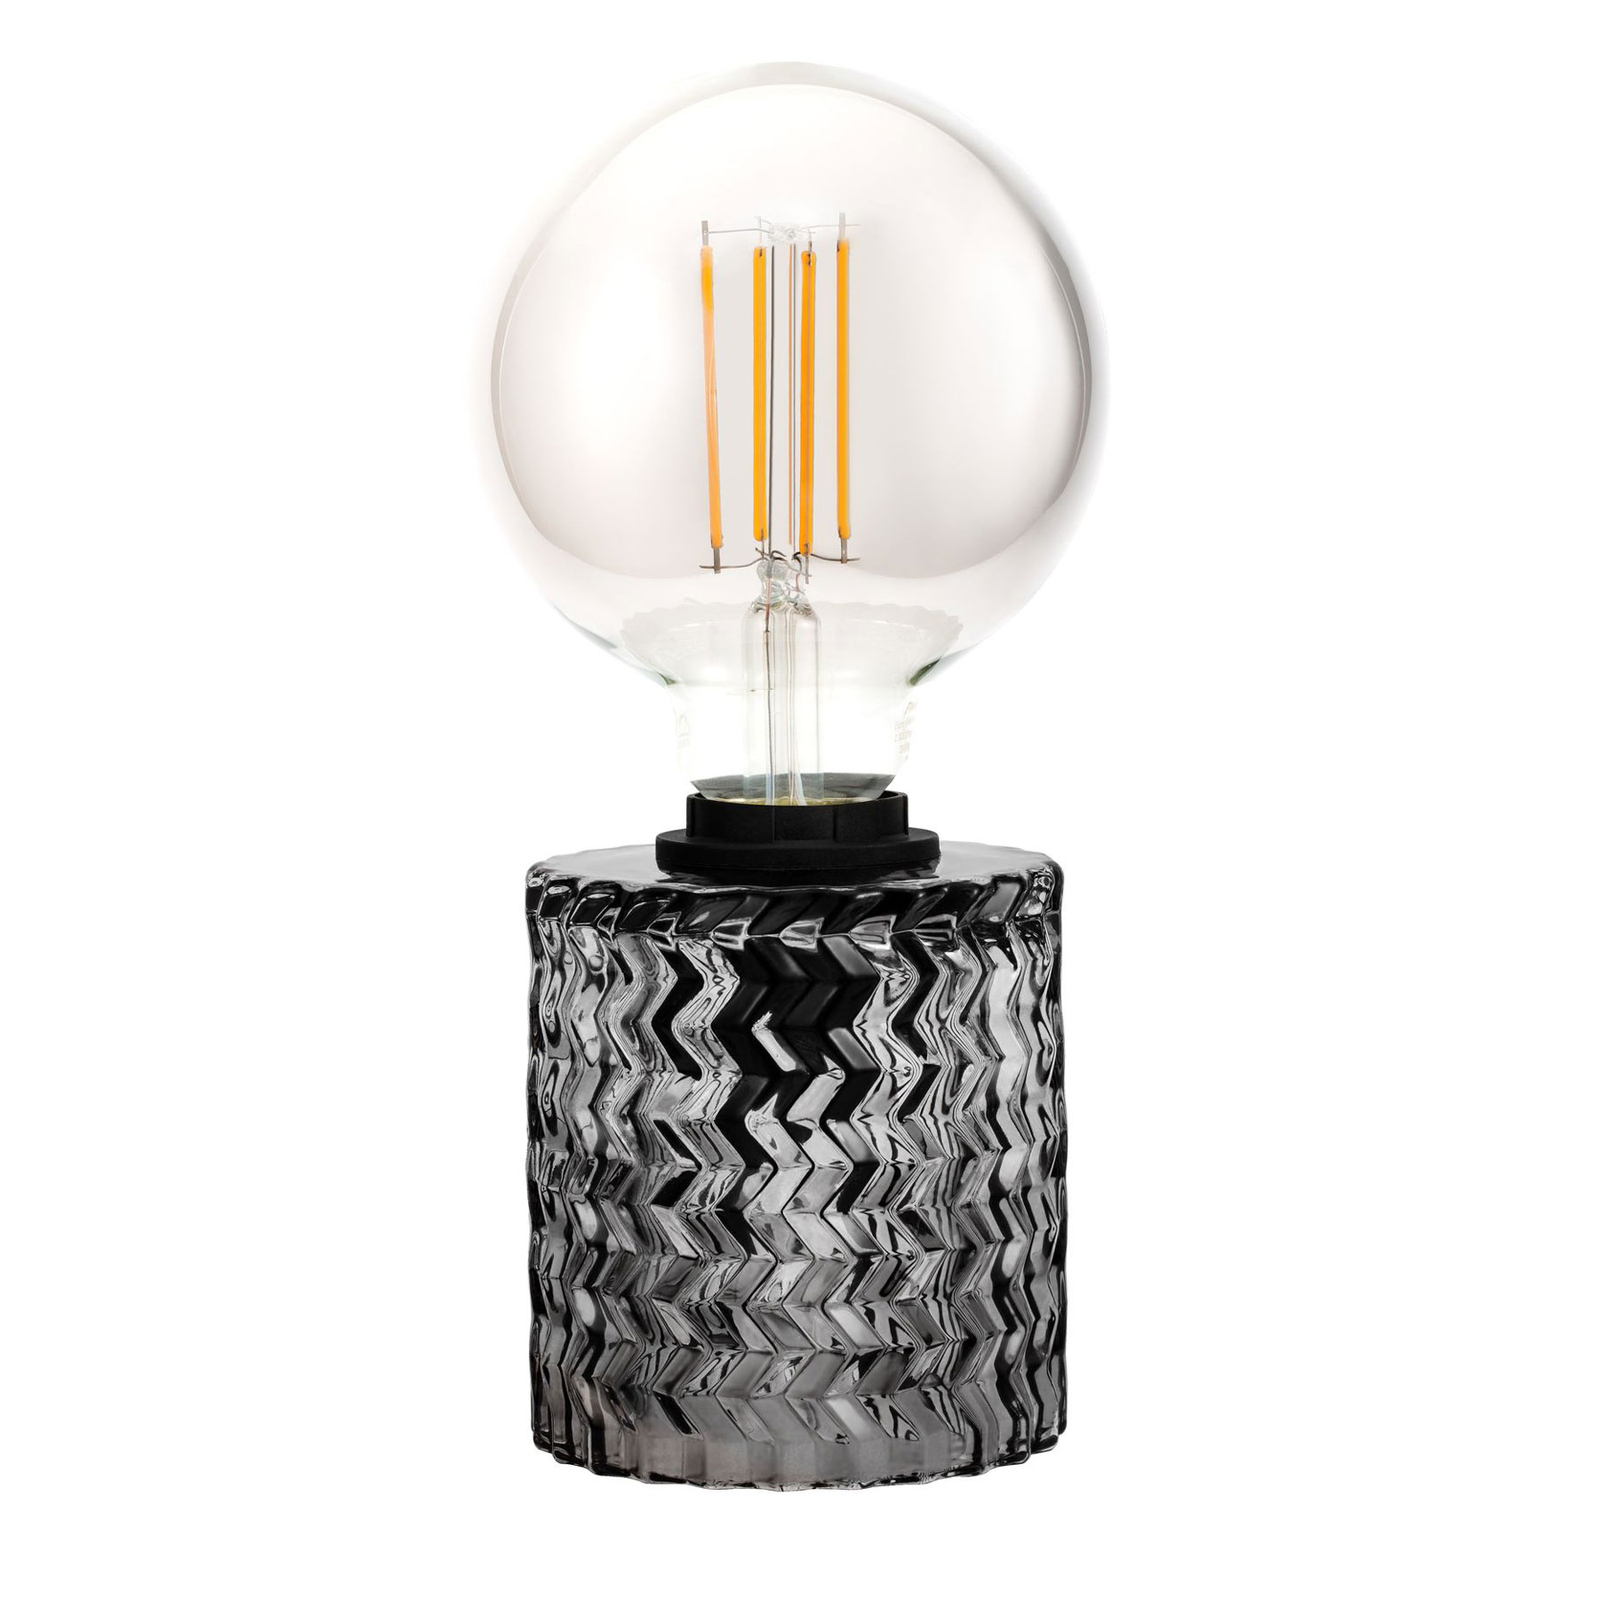 Pauleen Crystal Smoke bordslampa med glassockel